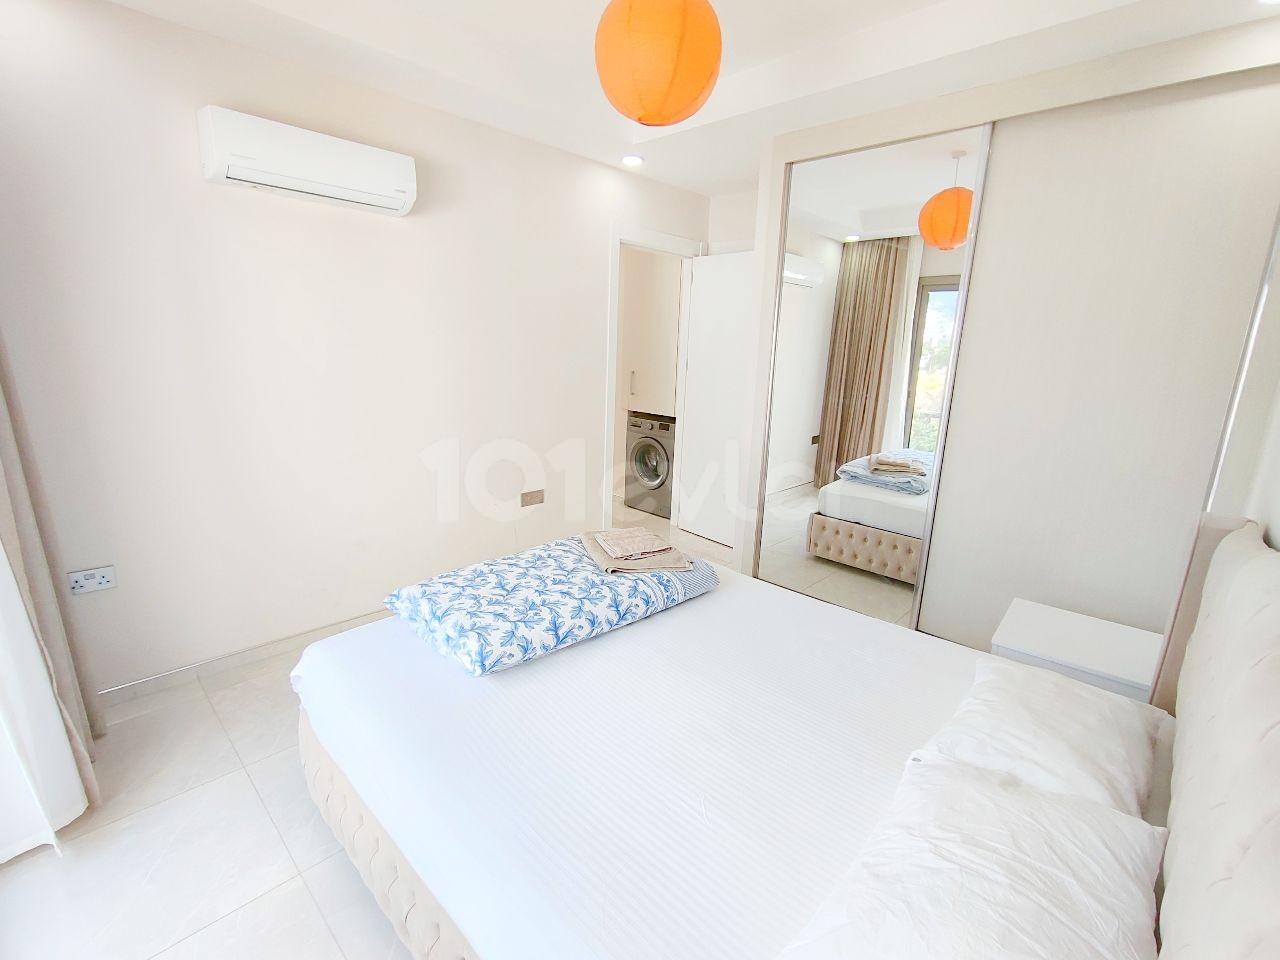 Ensuite 3+1 Luxury Flat for Rent in Kyrenia Center